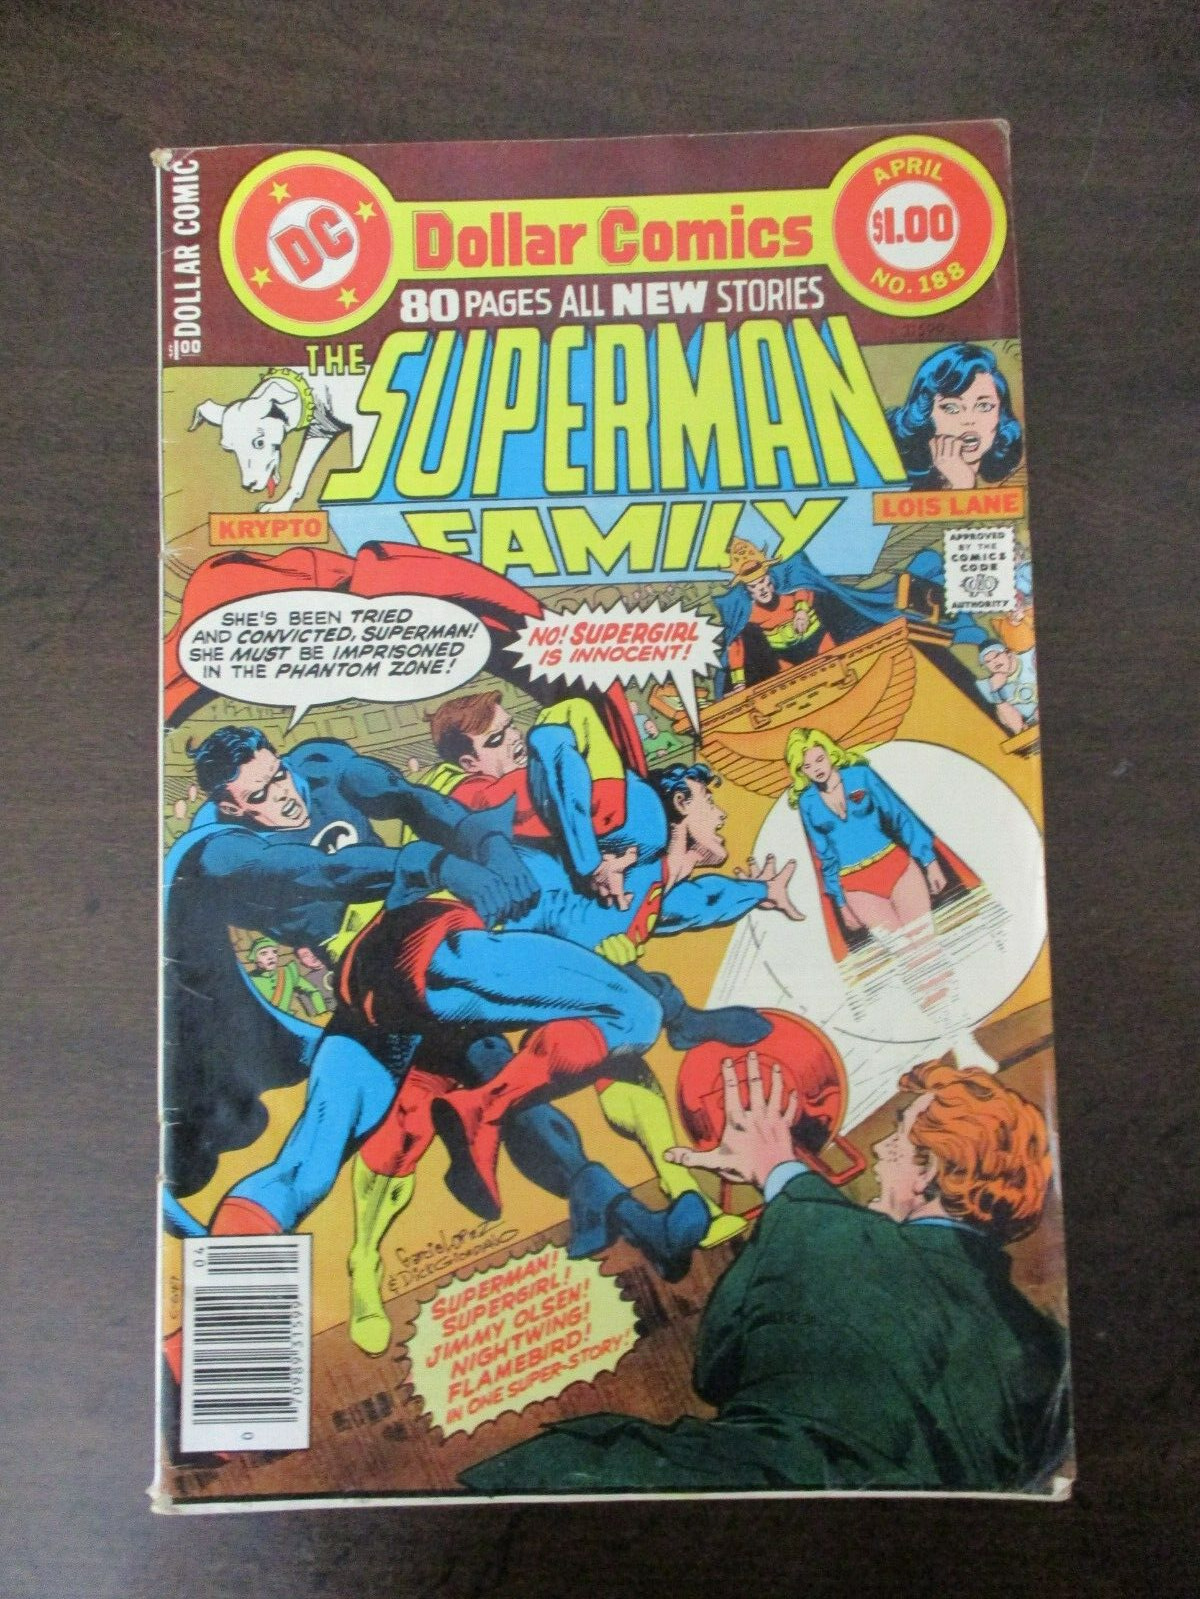 SUPERMAN FAMILY #188 APRIL 1978 FINE DC COMICS 80 PAGE GIANT DOLLAR COMICS